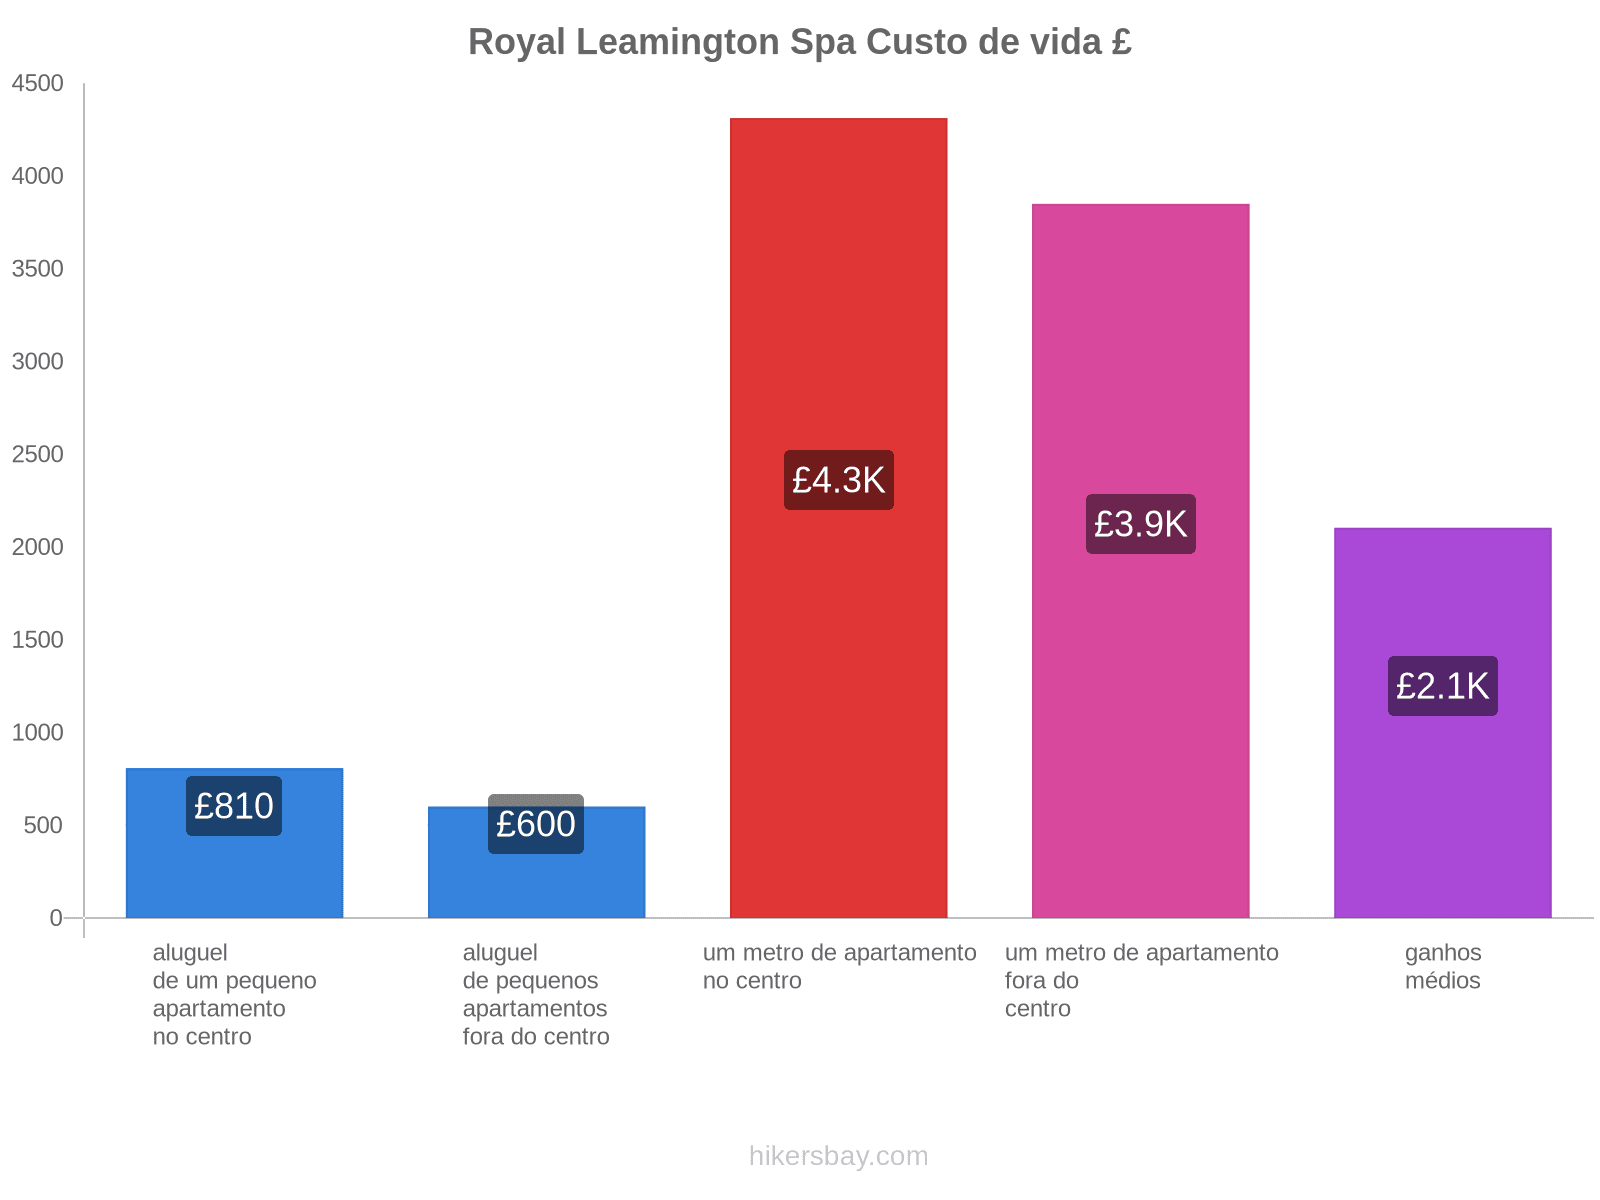 Royal Leamington Spa custo de vida hikersbay.com